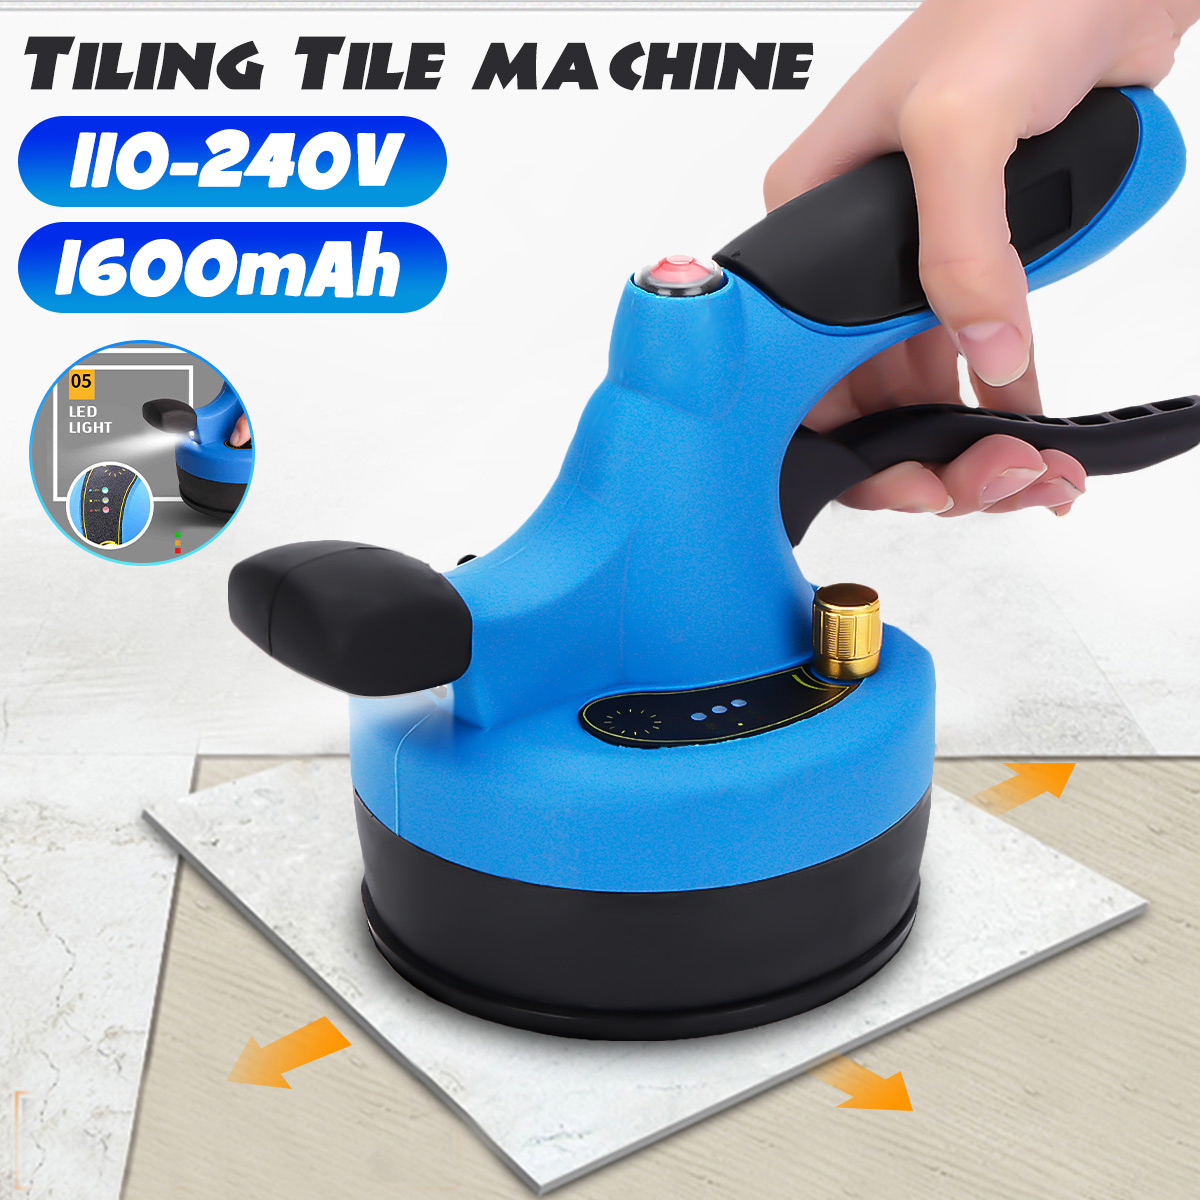 1600mAh 110-240V Tiling Tool Machine Tiling Tiles Machine Suction Porcelain Ceramic Floor Grip Handle Electric Floor Vibrators